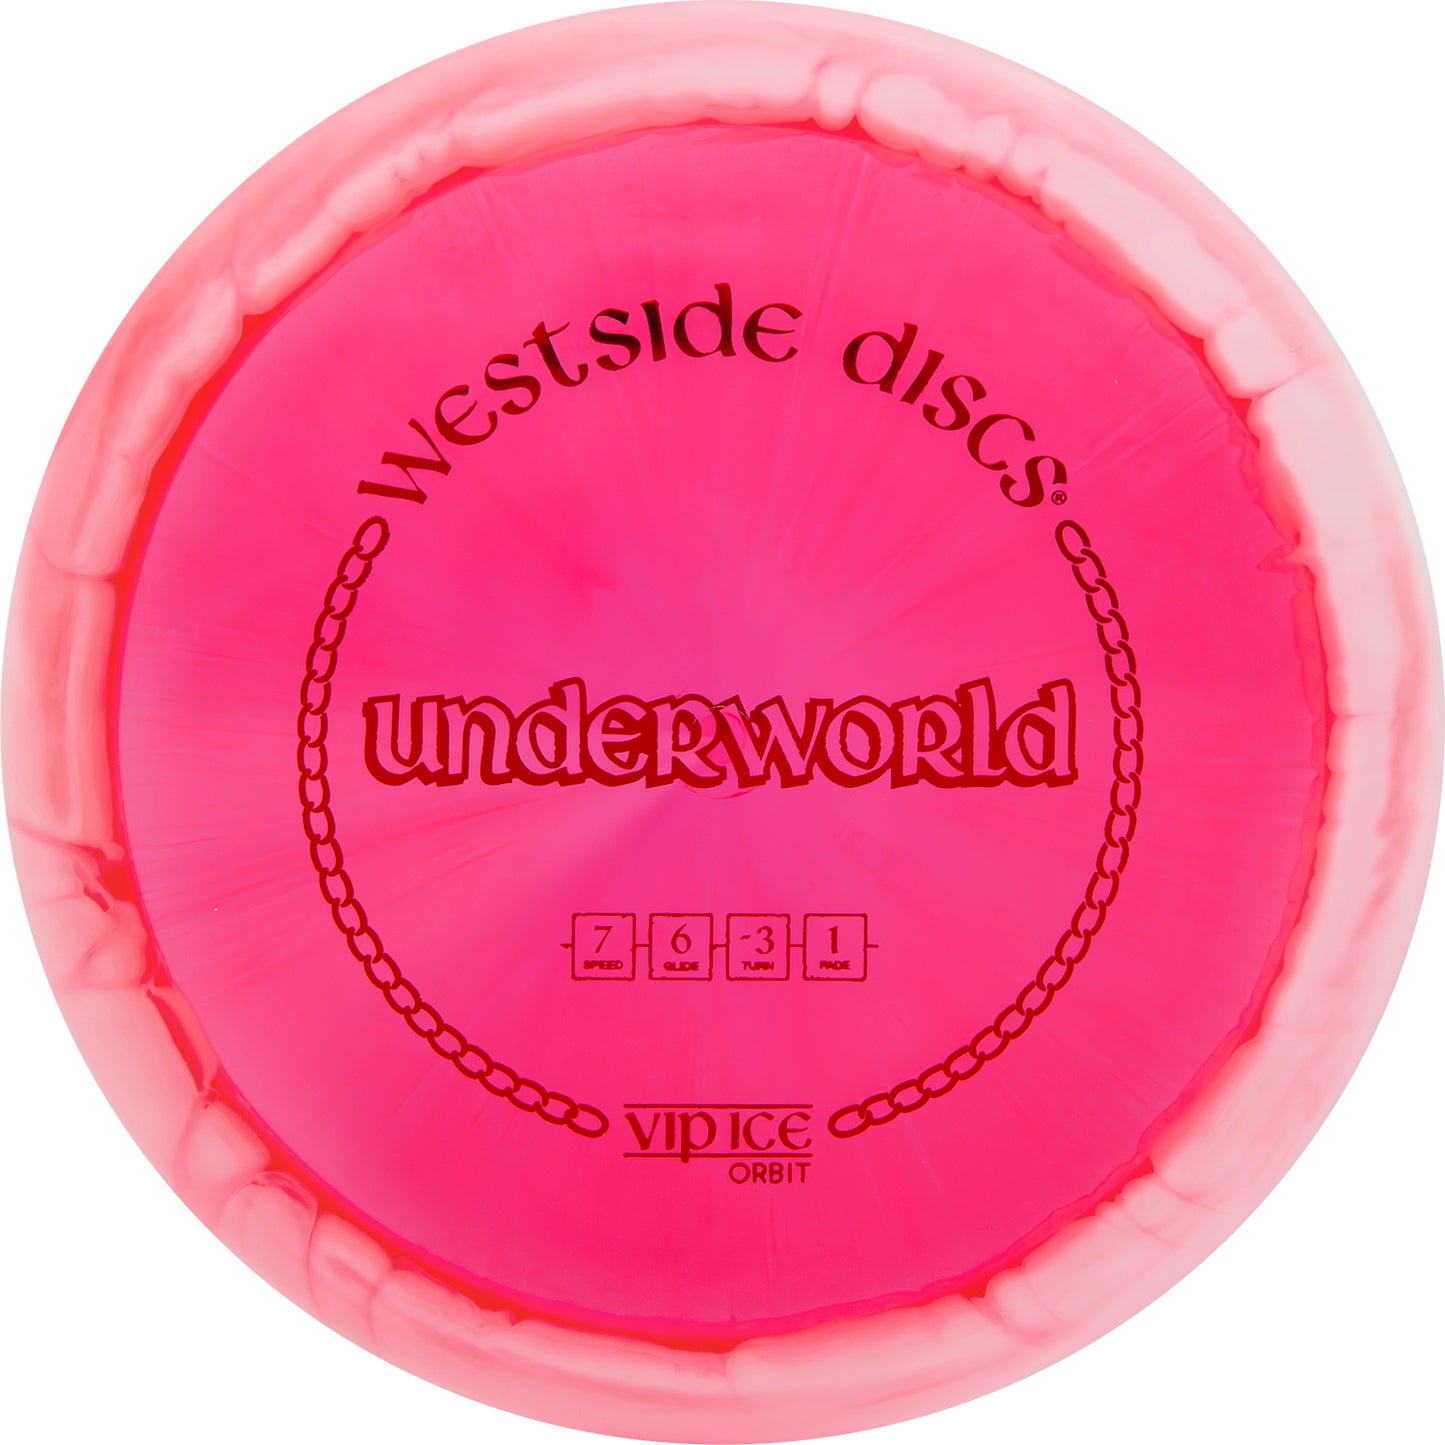 Westside Discs VIP-Ice Orbit Underworld